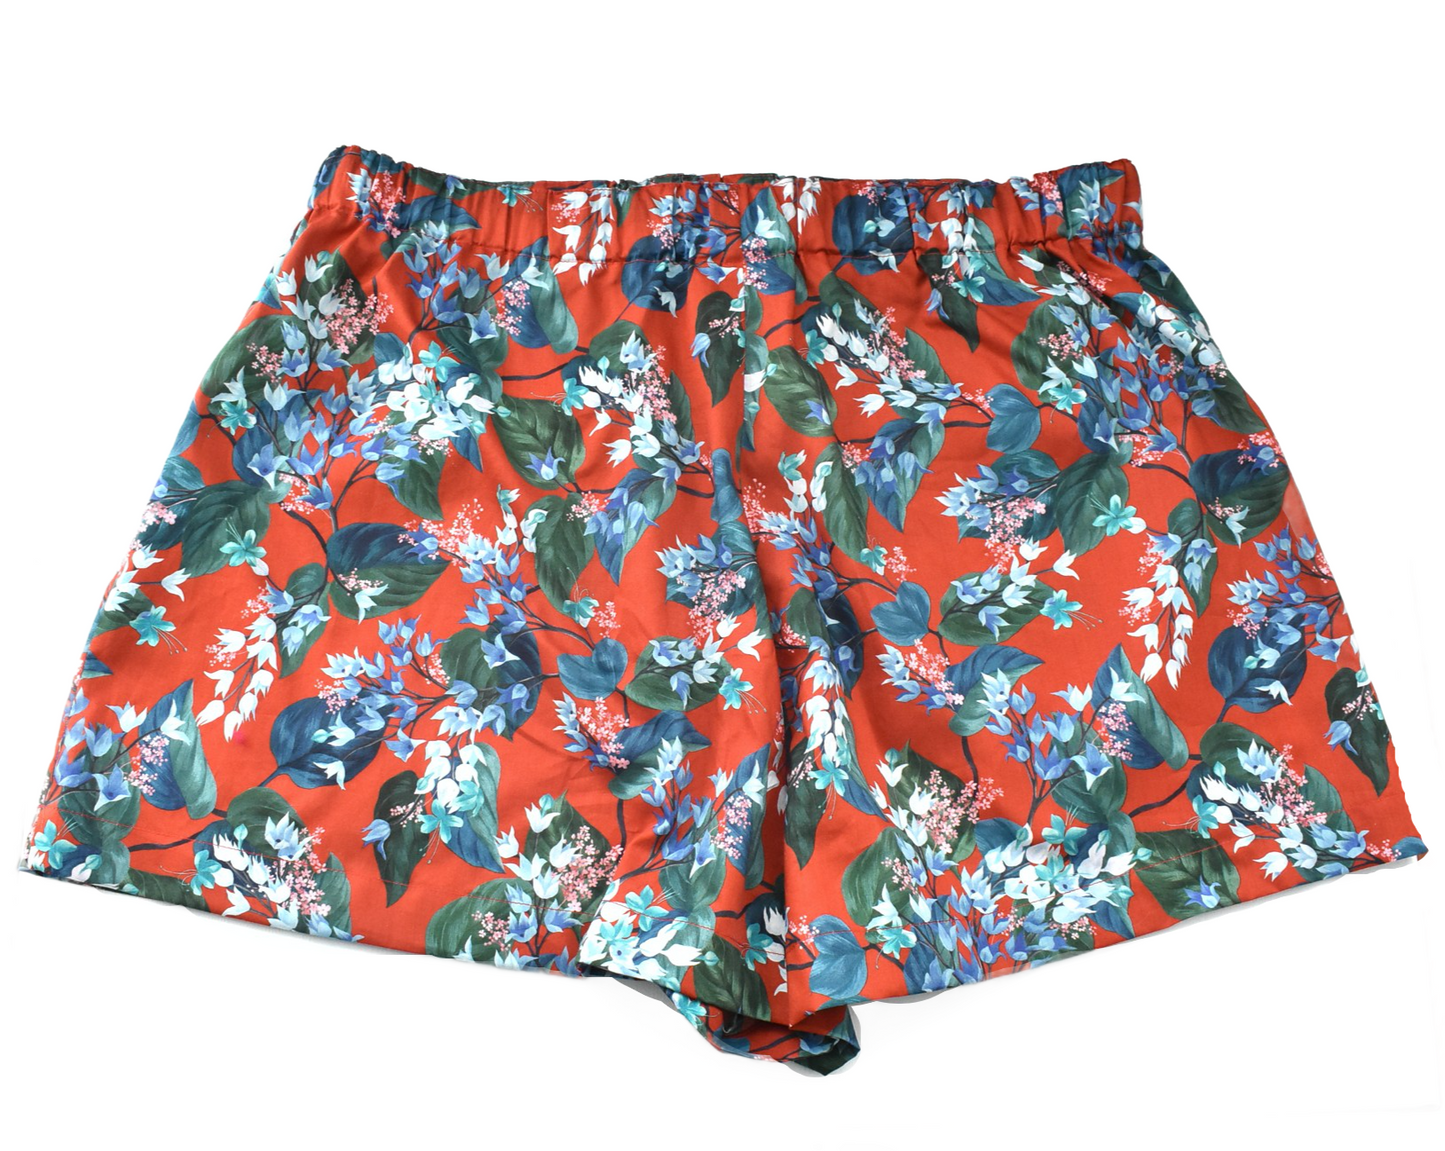 Classic Pyjama Shorts - Liberty London - red floral